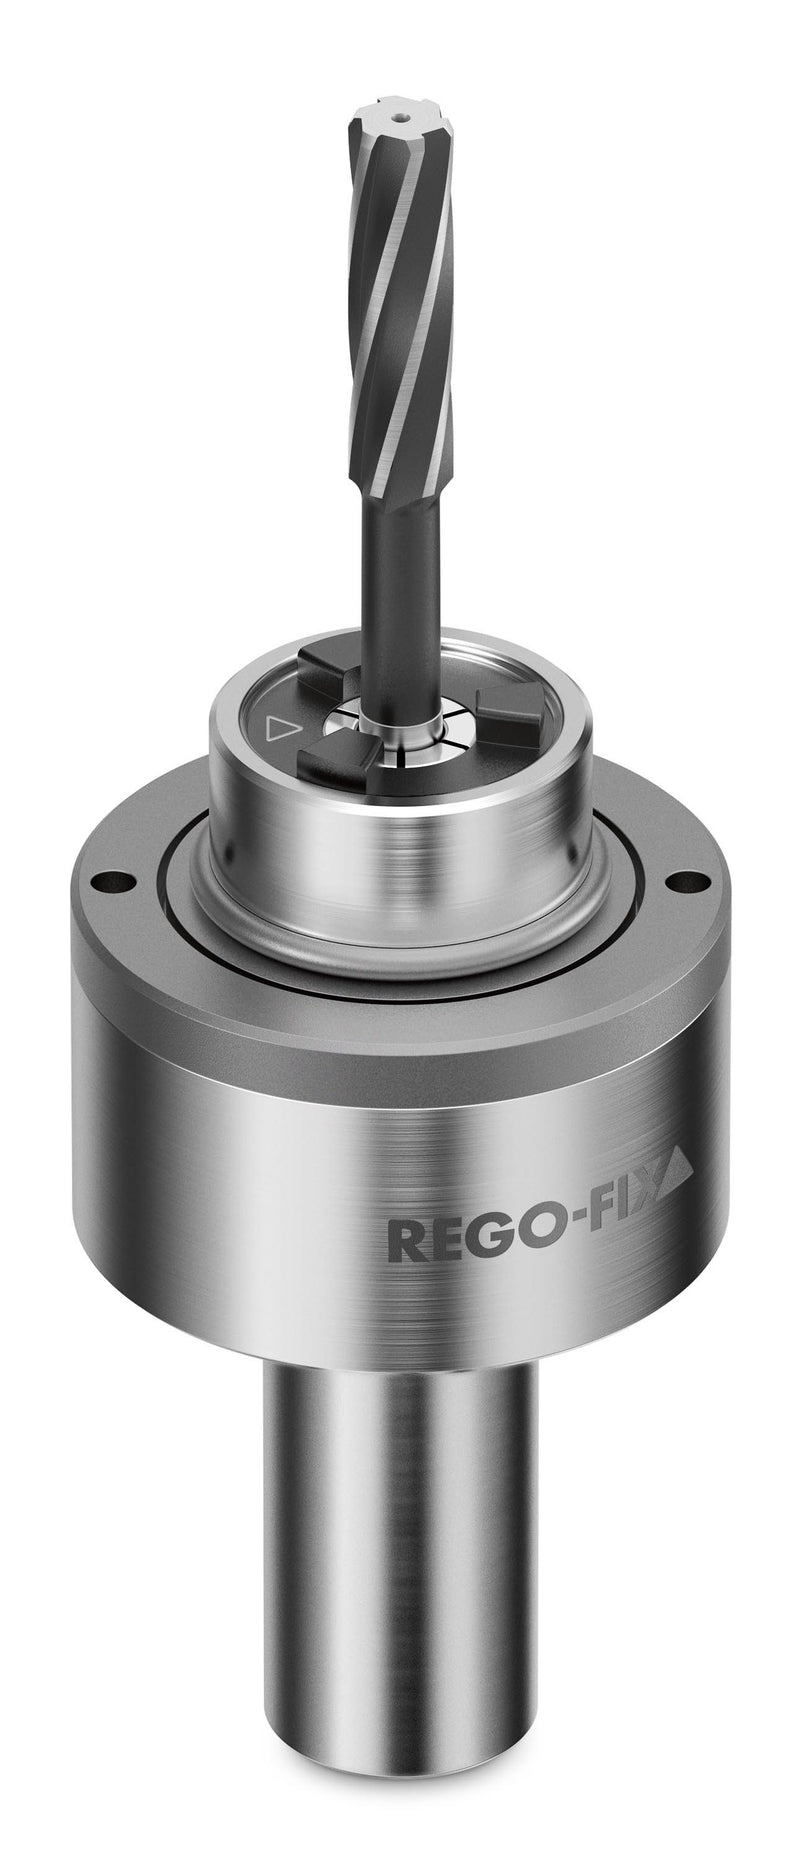 Rego-Fix PH 5/8" / ER 11 Tool Holder 2616.91102 (0646014)